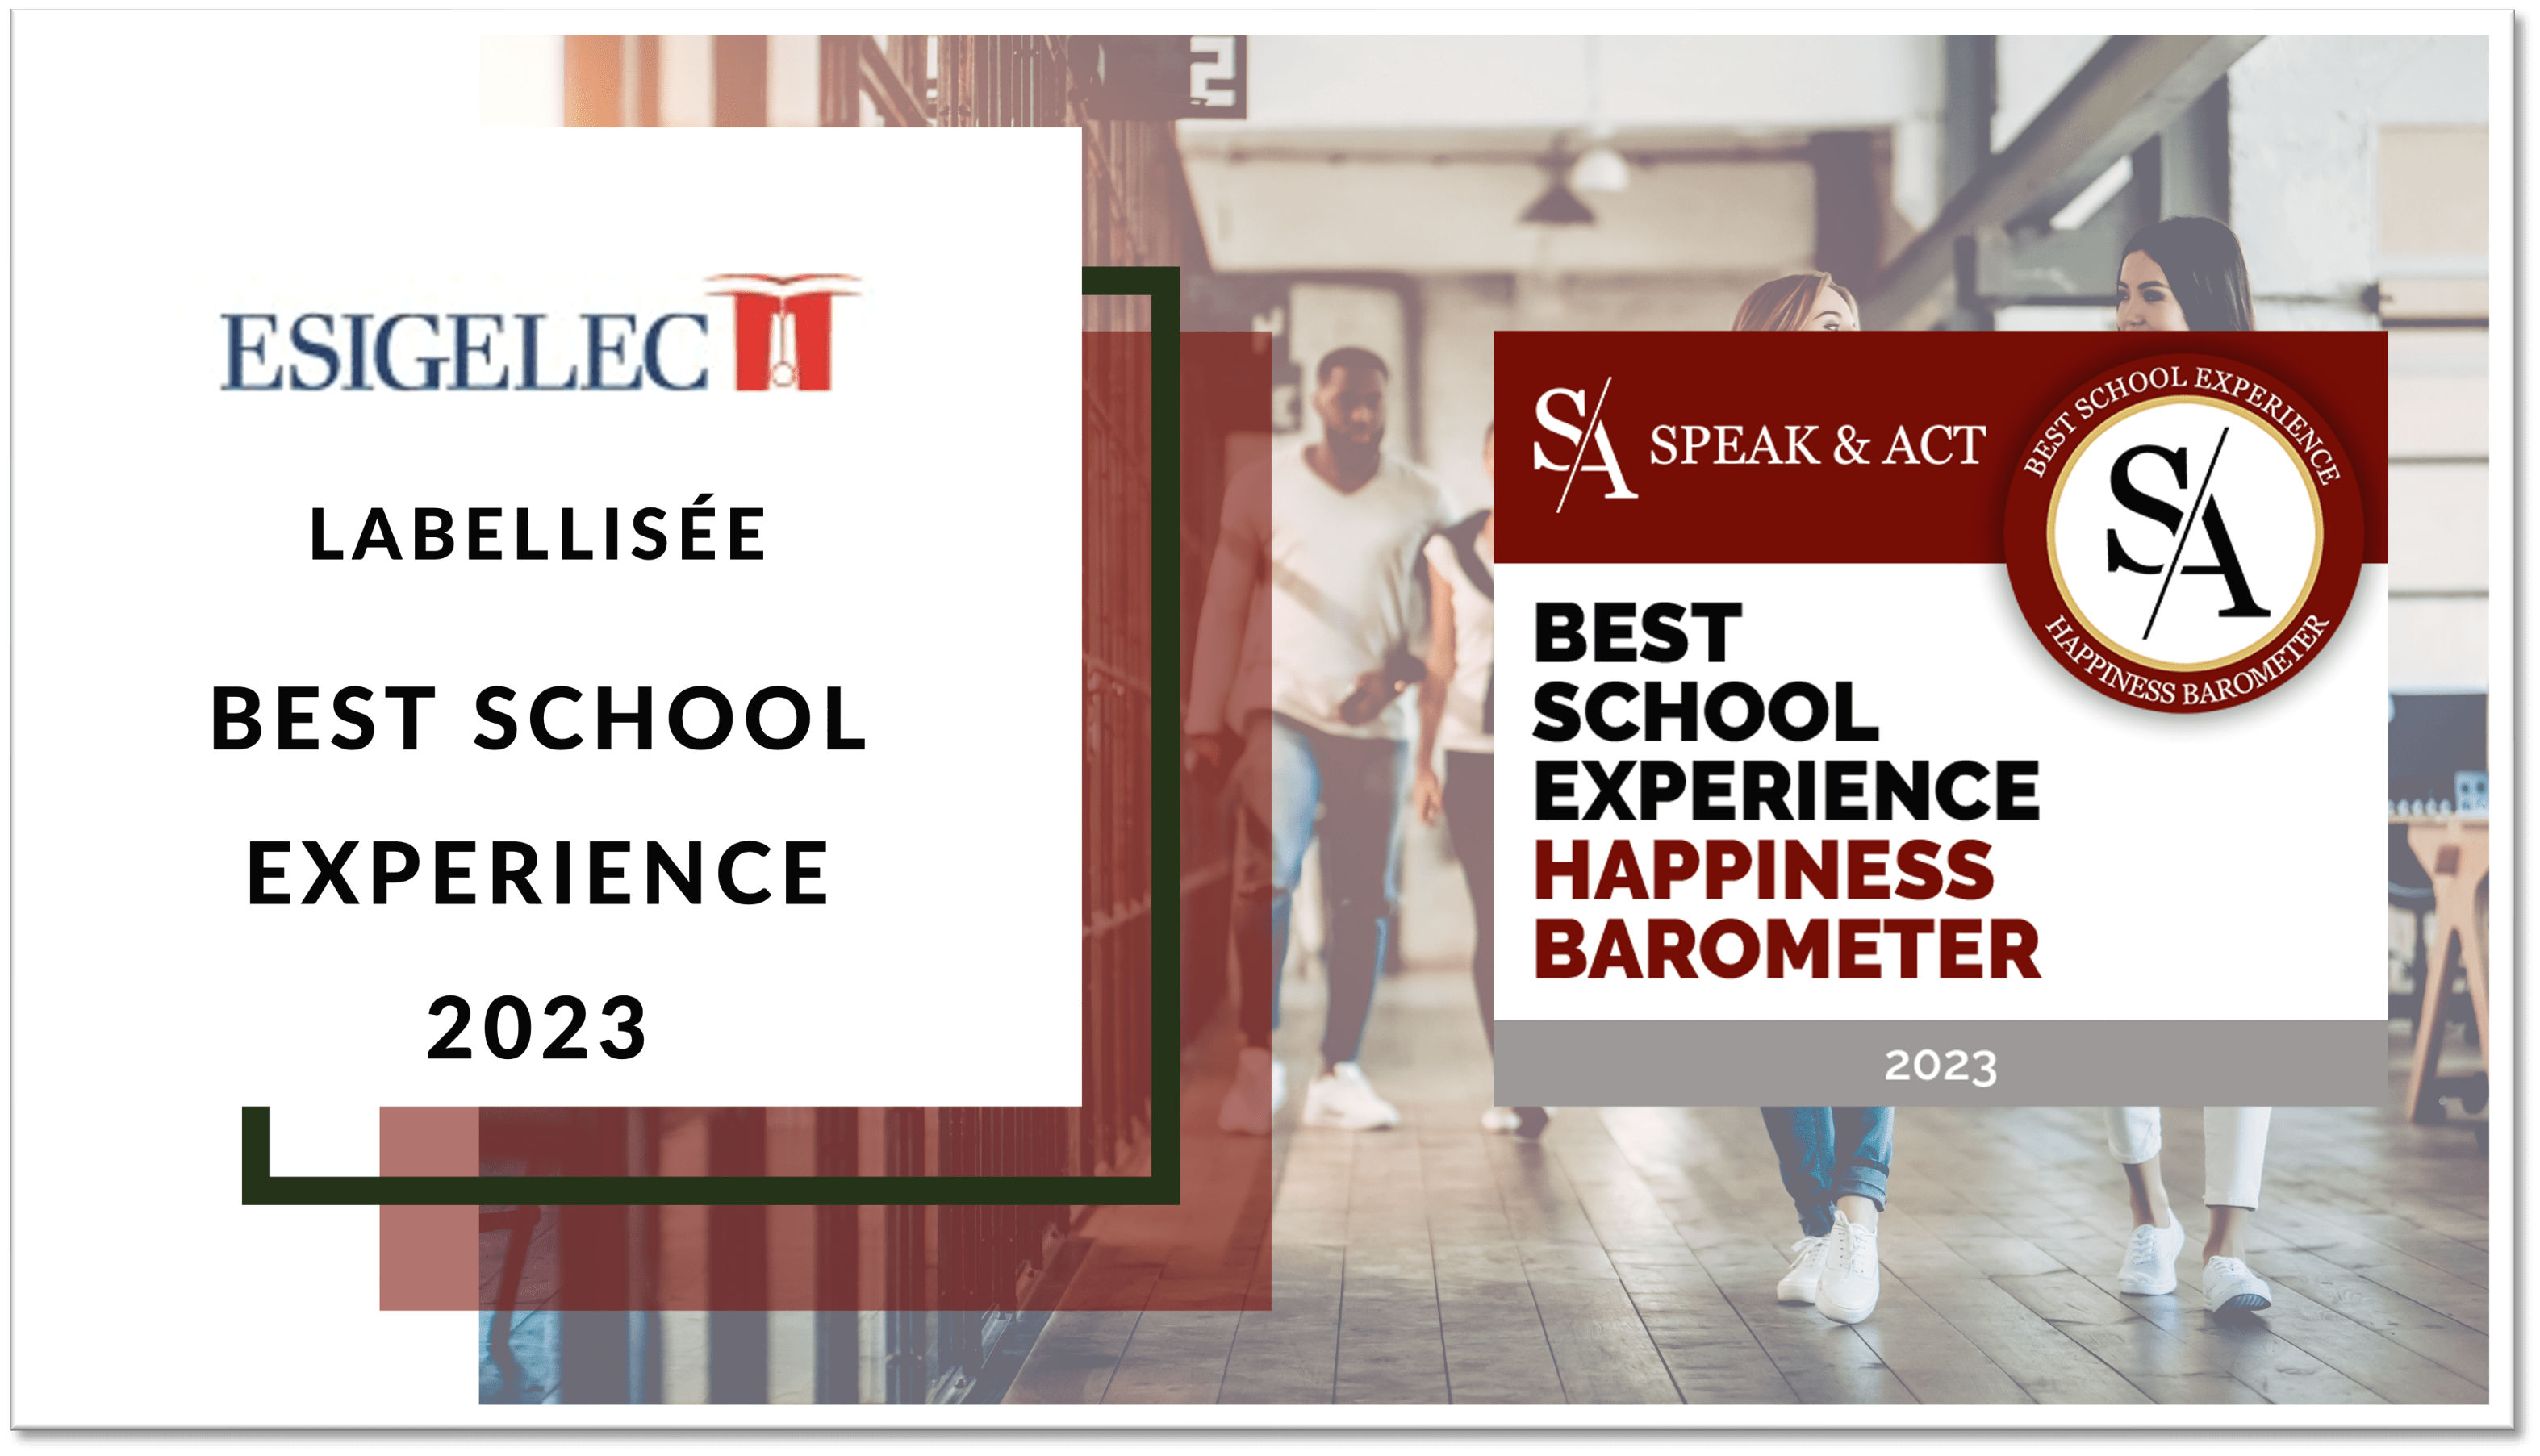 ESIGELEC, labellisée Best School Experience 2023 par Speak & Act